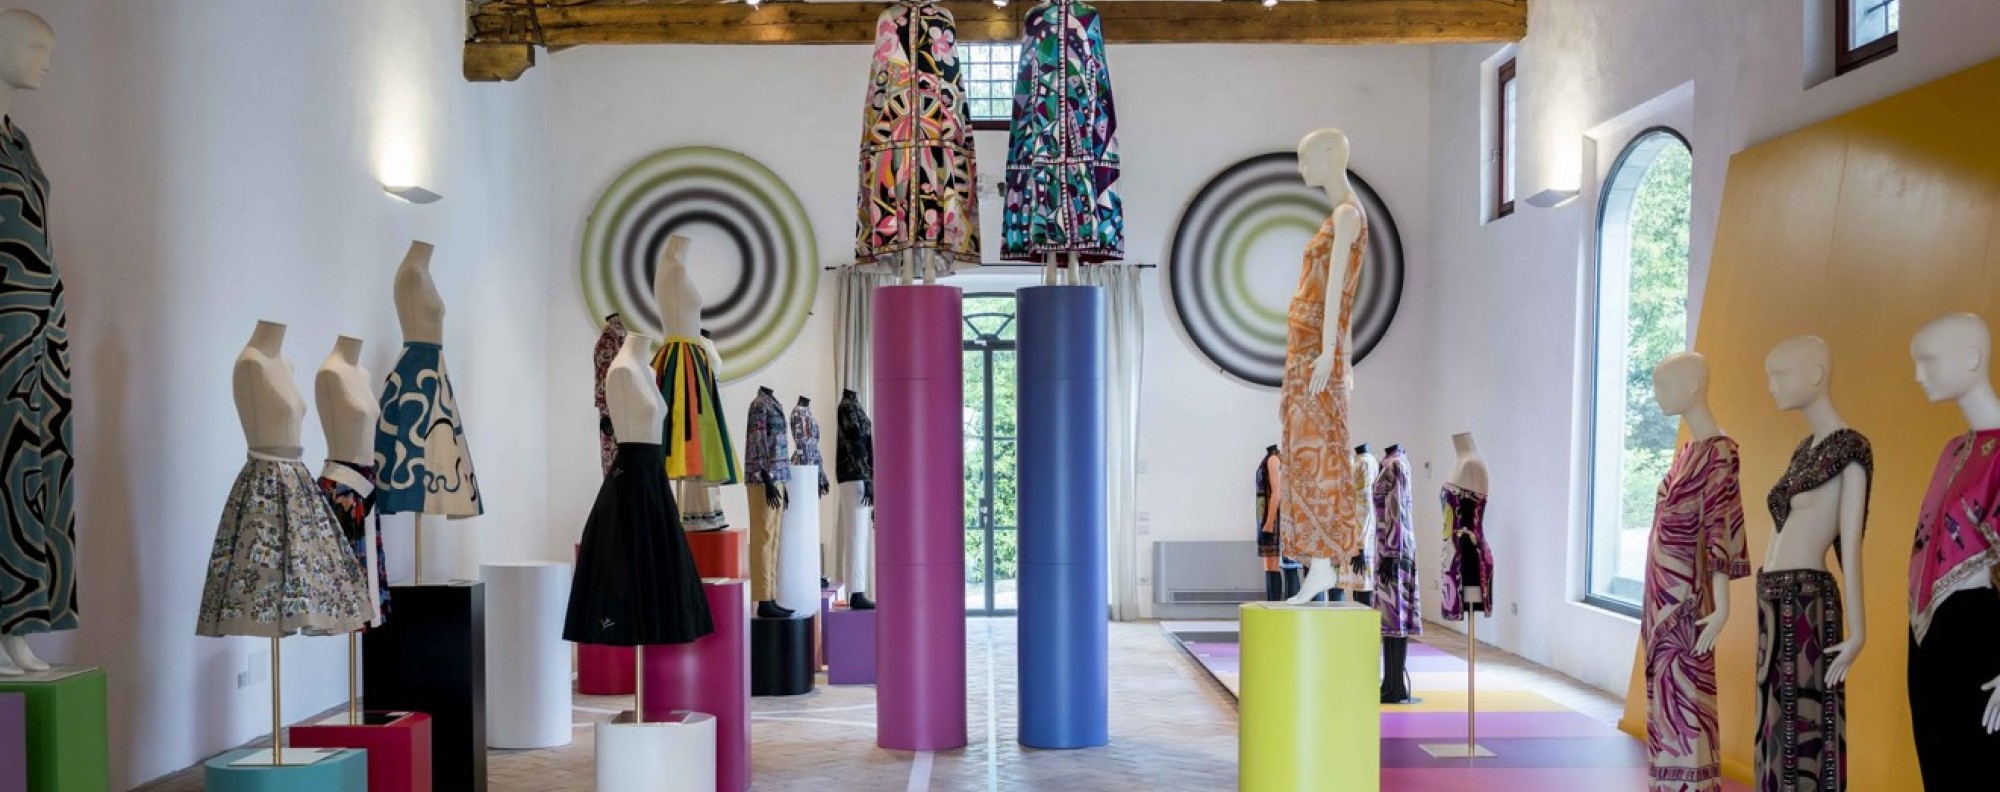 Museum at FIT - #WhyILoveMuseums Designer Emilio Pucci flourished